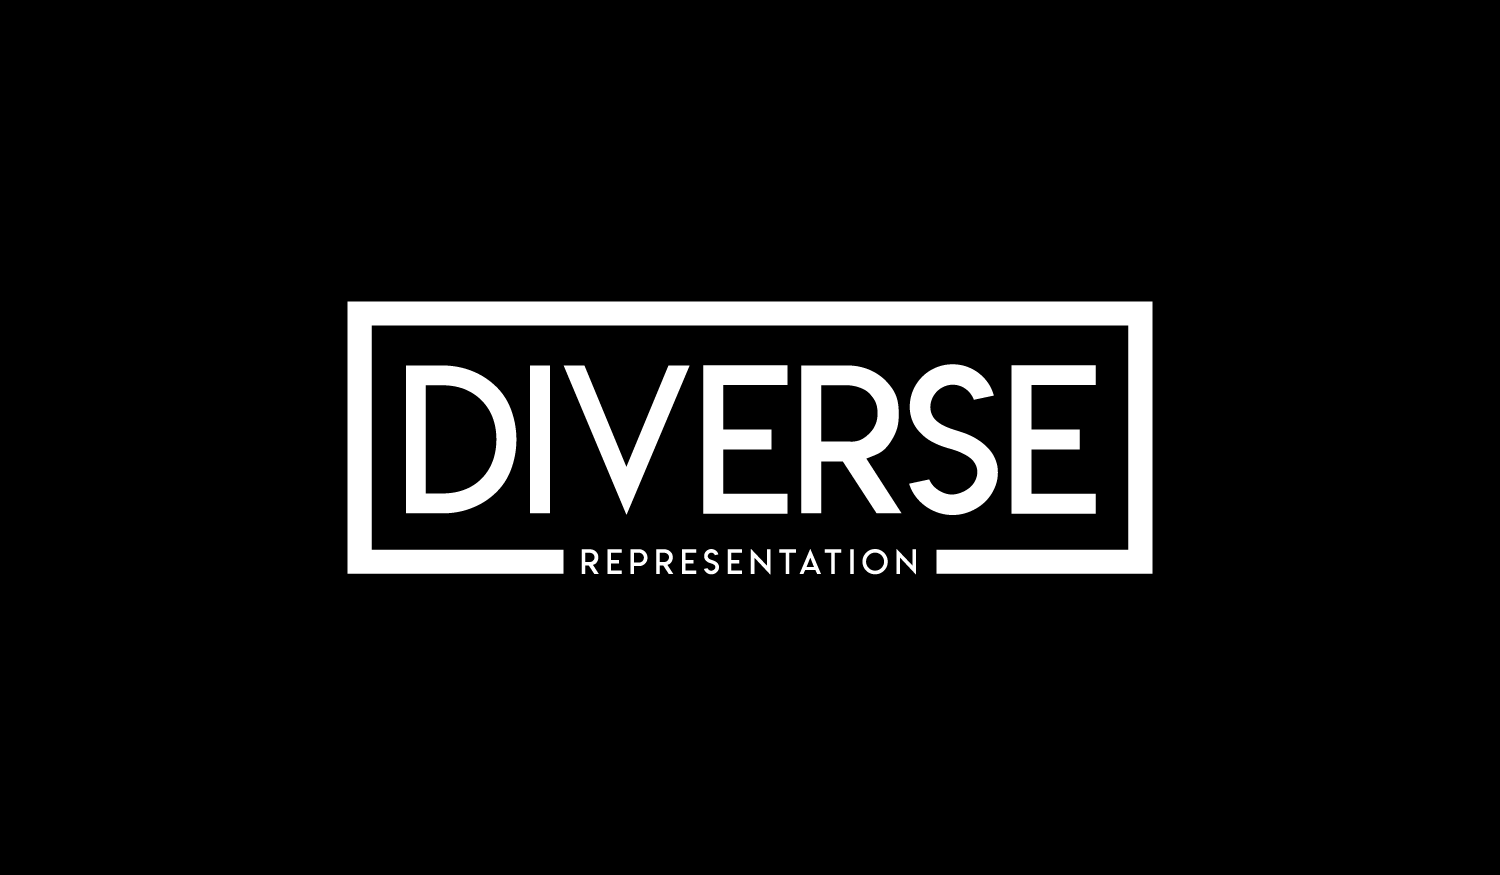 Diverse Representation's logo